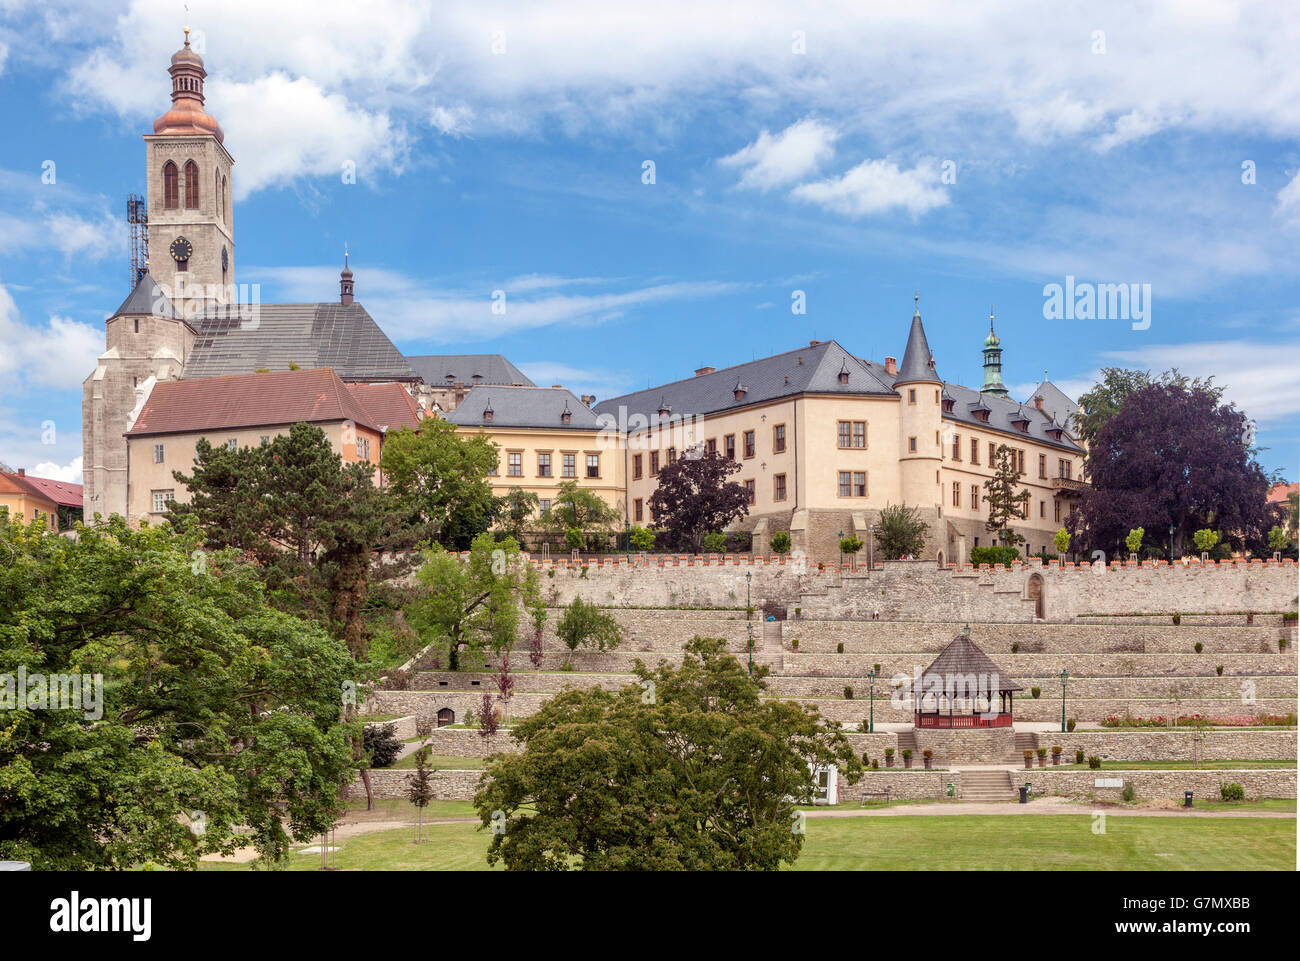 St James Church and Italian Court, Kutna Hora, UNESCO town, Czech Republic Stock Photo